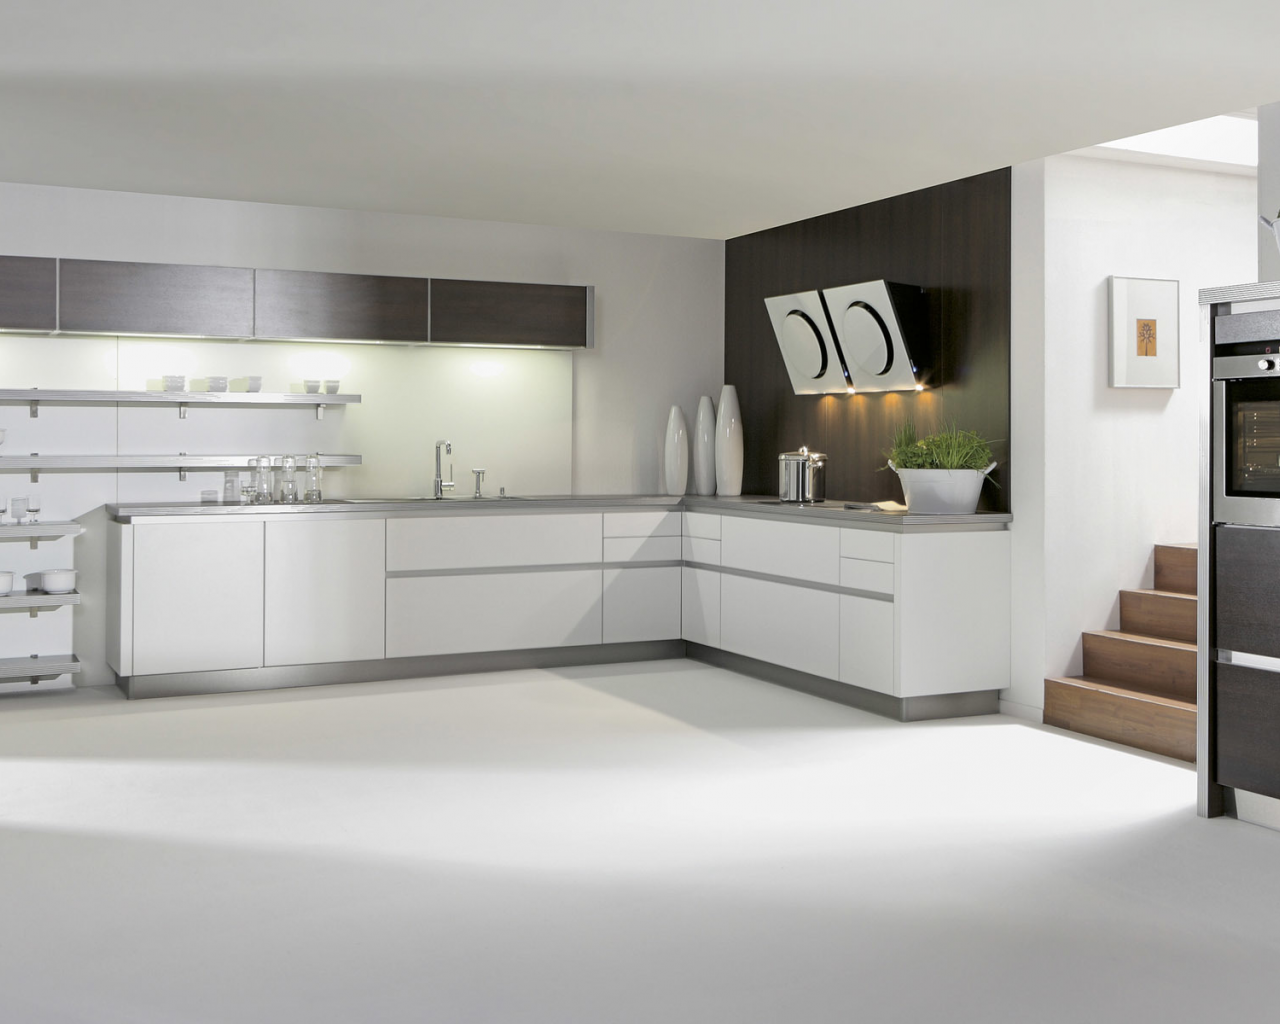 стиль, мебель, кухня, white, дизайн, kitchen, белая, design, interior